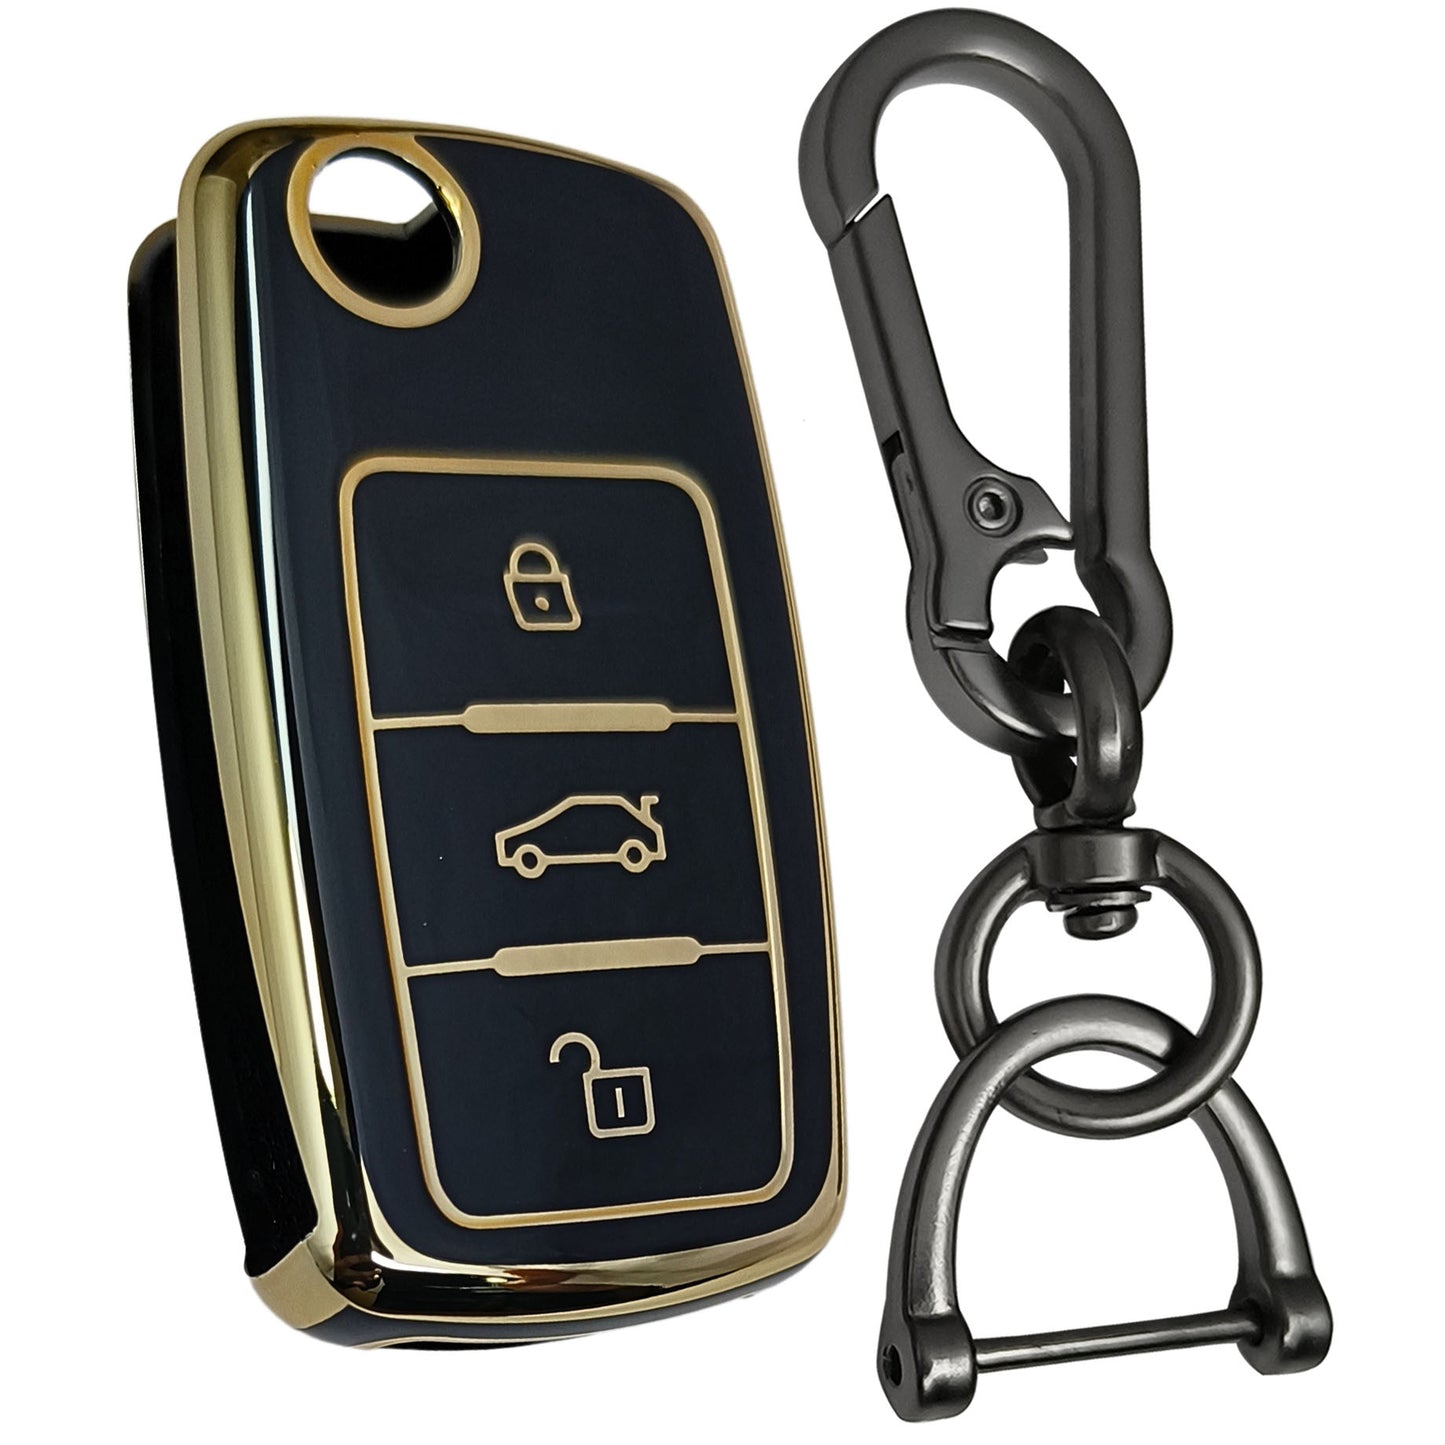 skoda octavia laura fabia 3 button flip key tpu  black gold key cover case accessories keychain